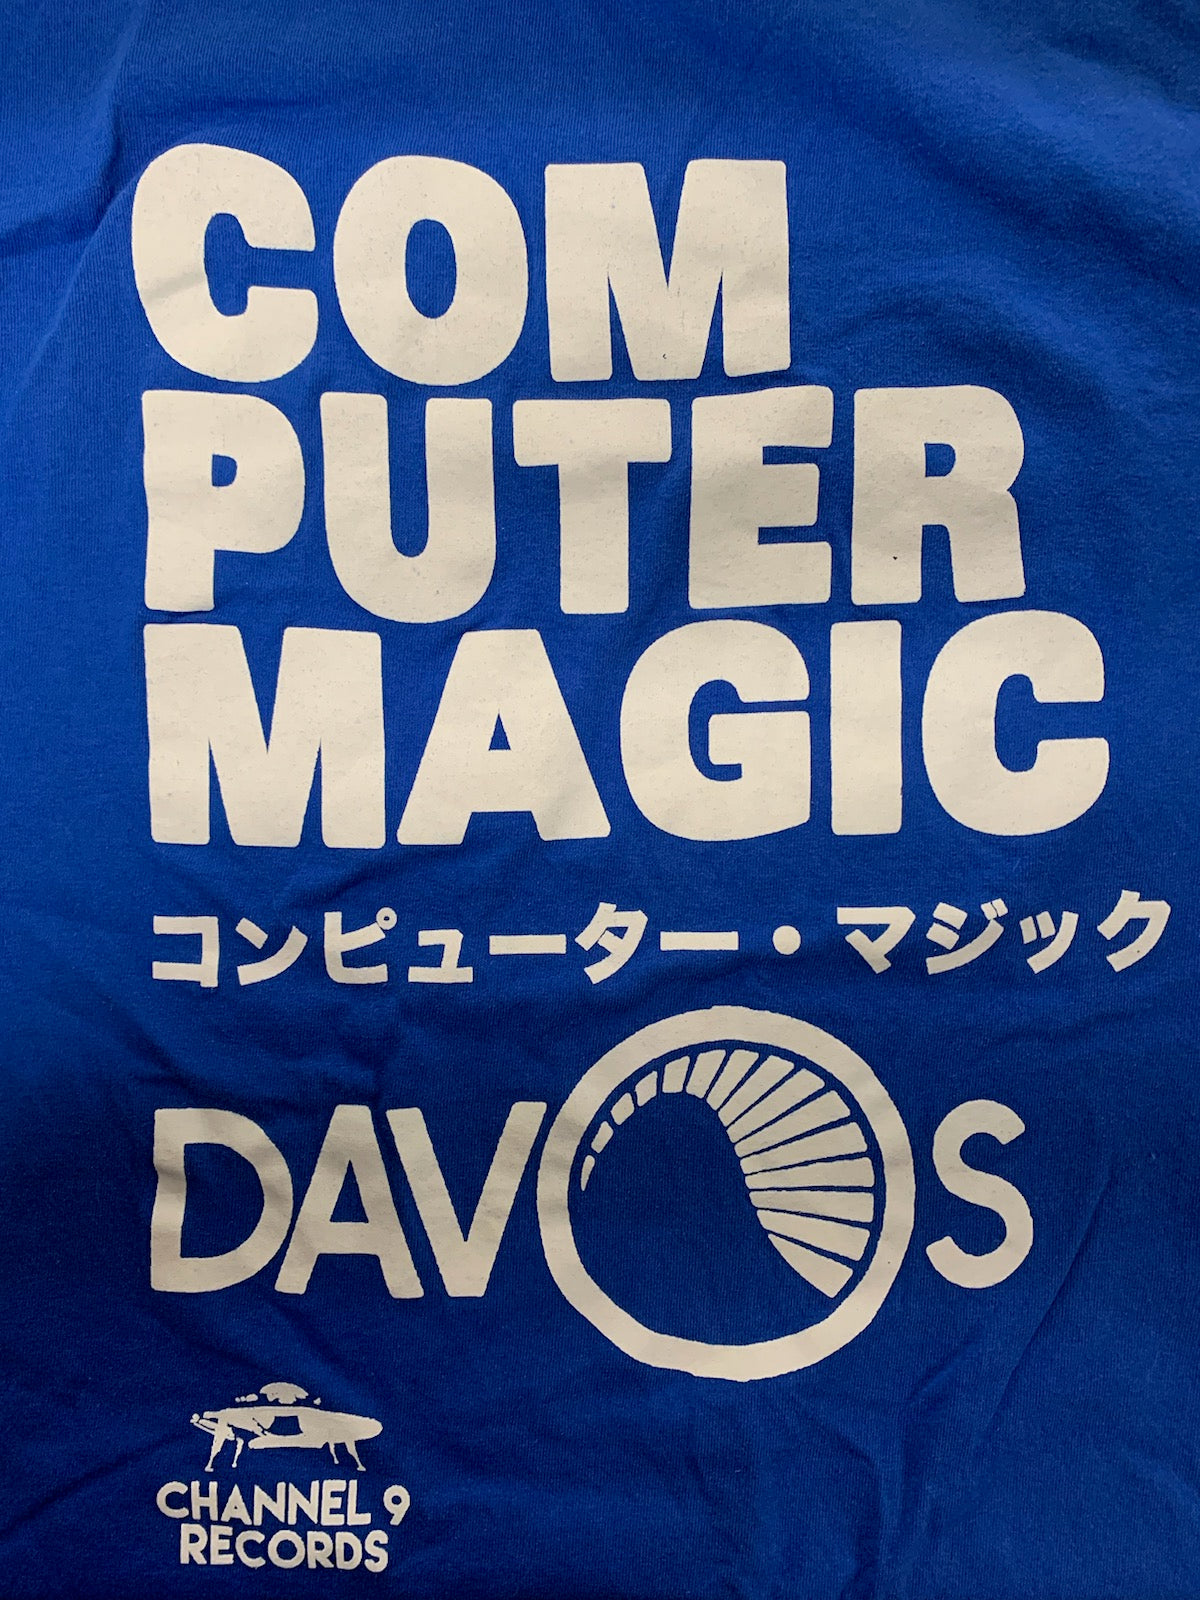 Computer Magic Davos T-Shirt, Blue, M